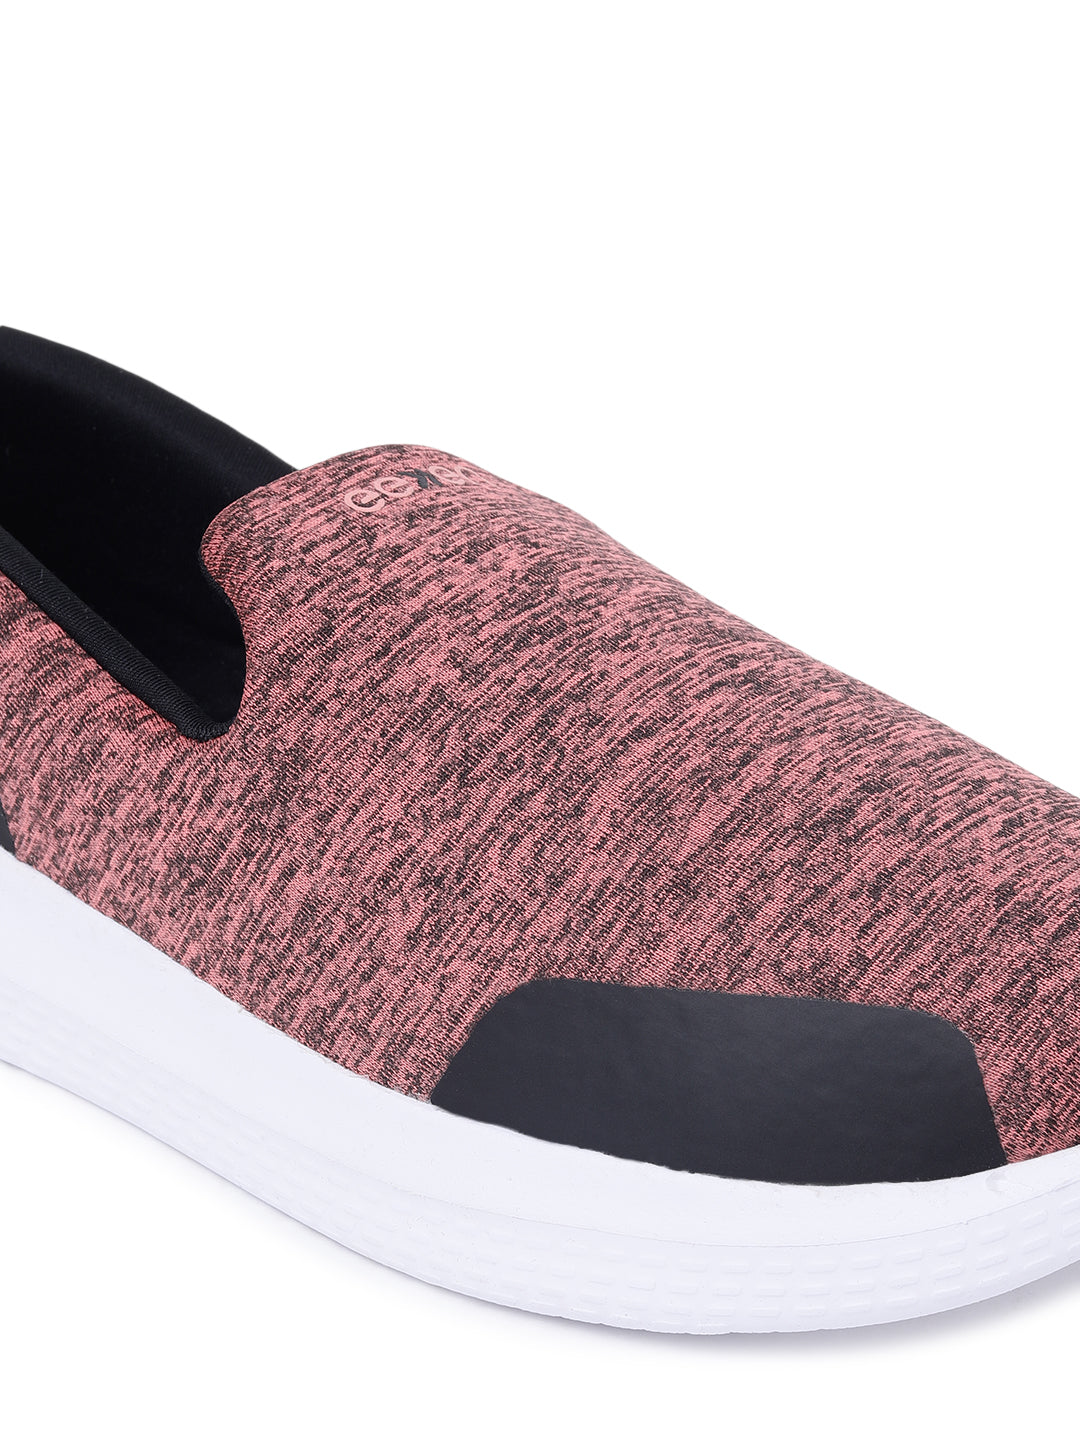 Eeken Lightweight Pink Casual Slip-On Shoes For Women